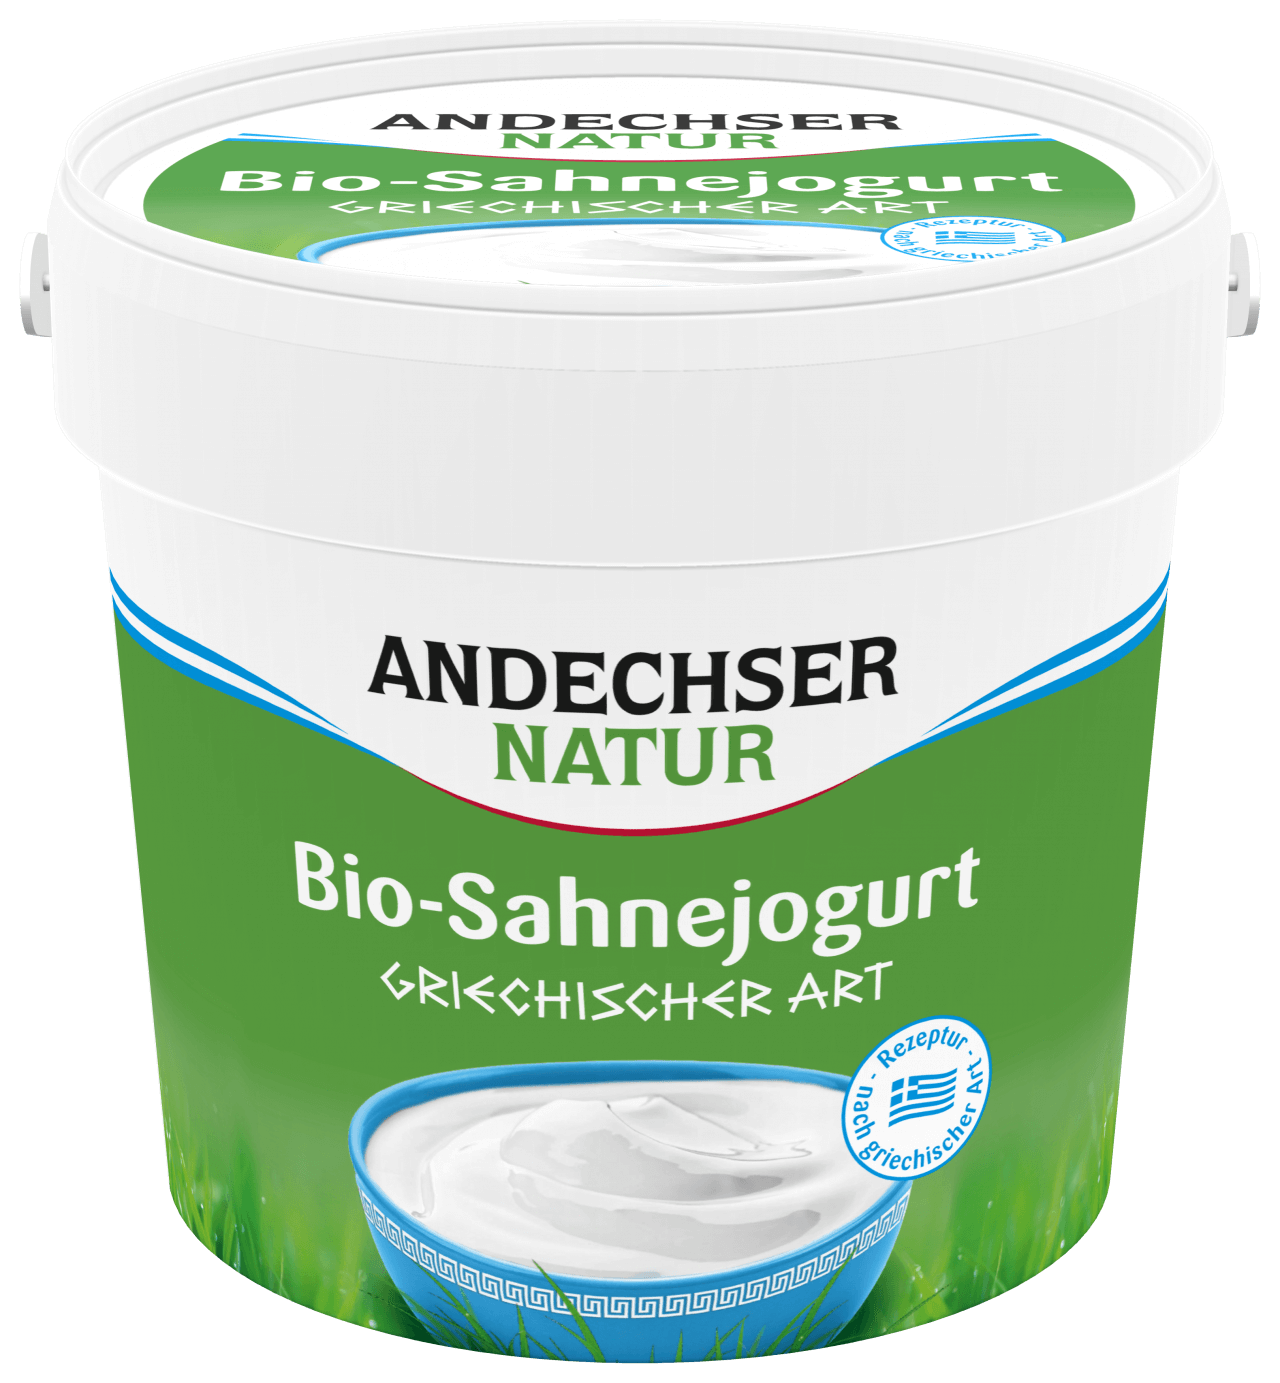 ANDECHSER NATUR Bio-Sahnejogurt 1kg